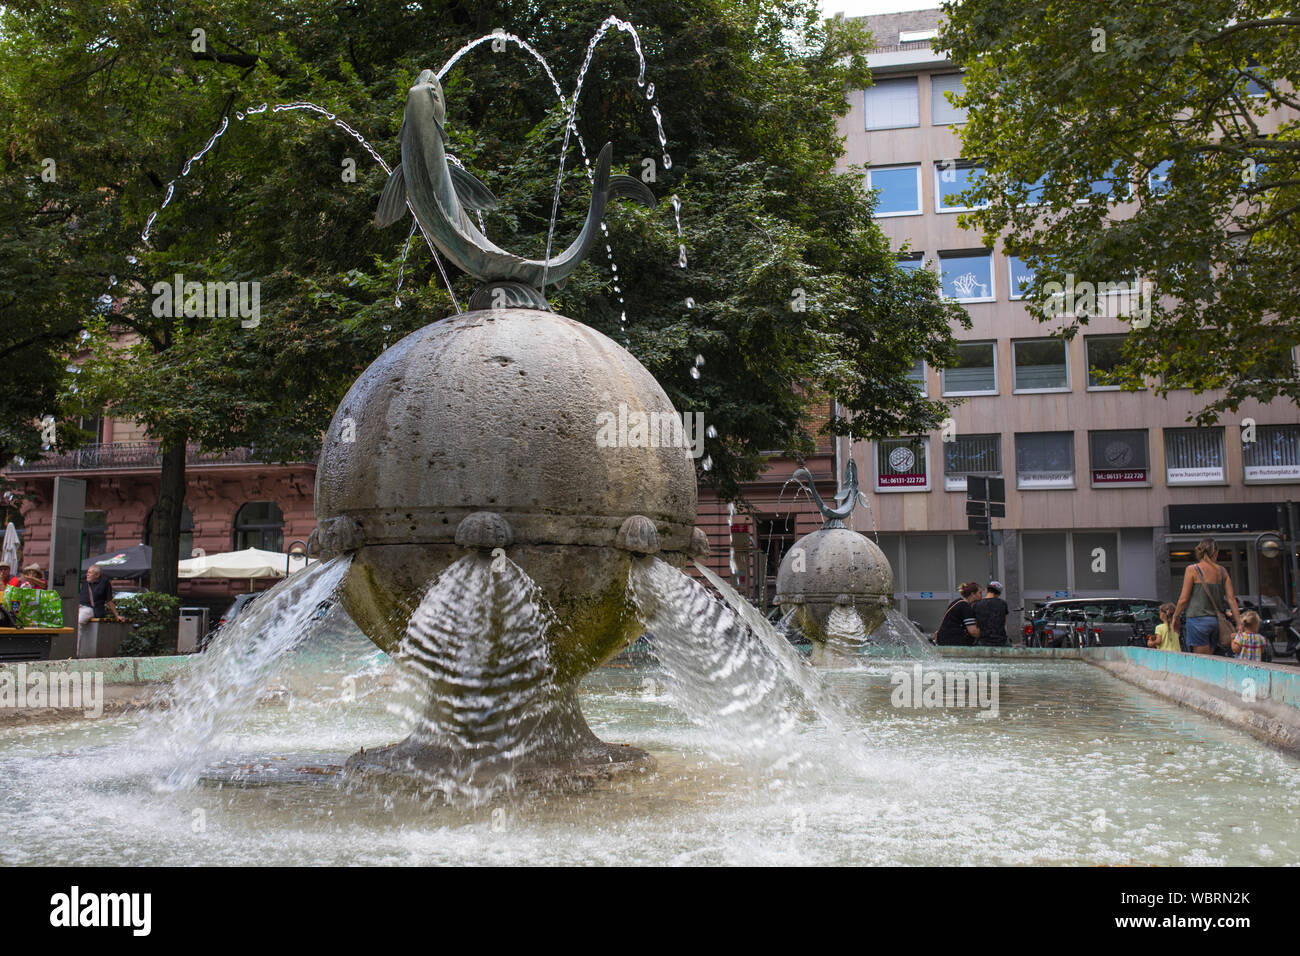 Fontana con pesci 'Fischtorbrunnen' e persone in background, Mainz, Germania Foto Stock